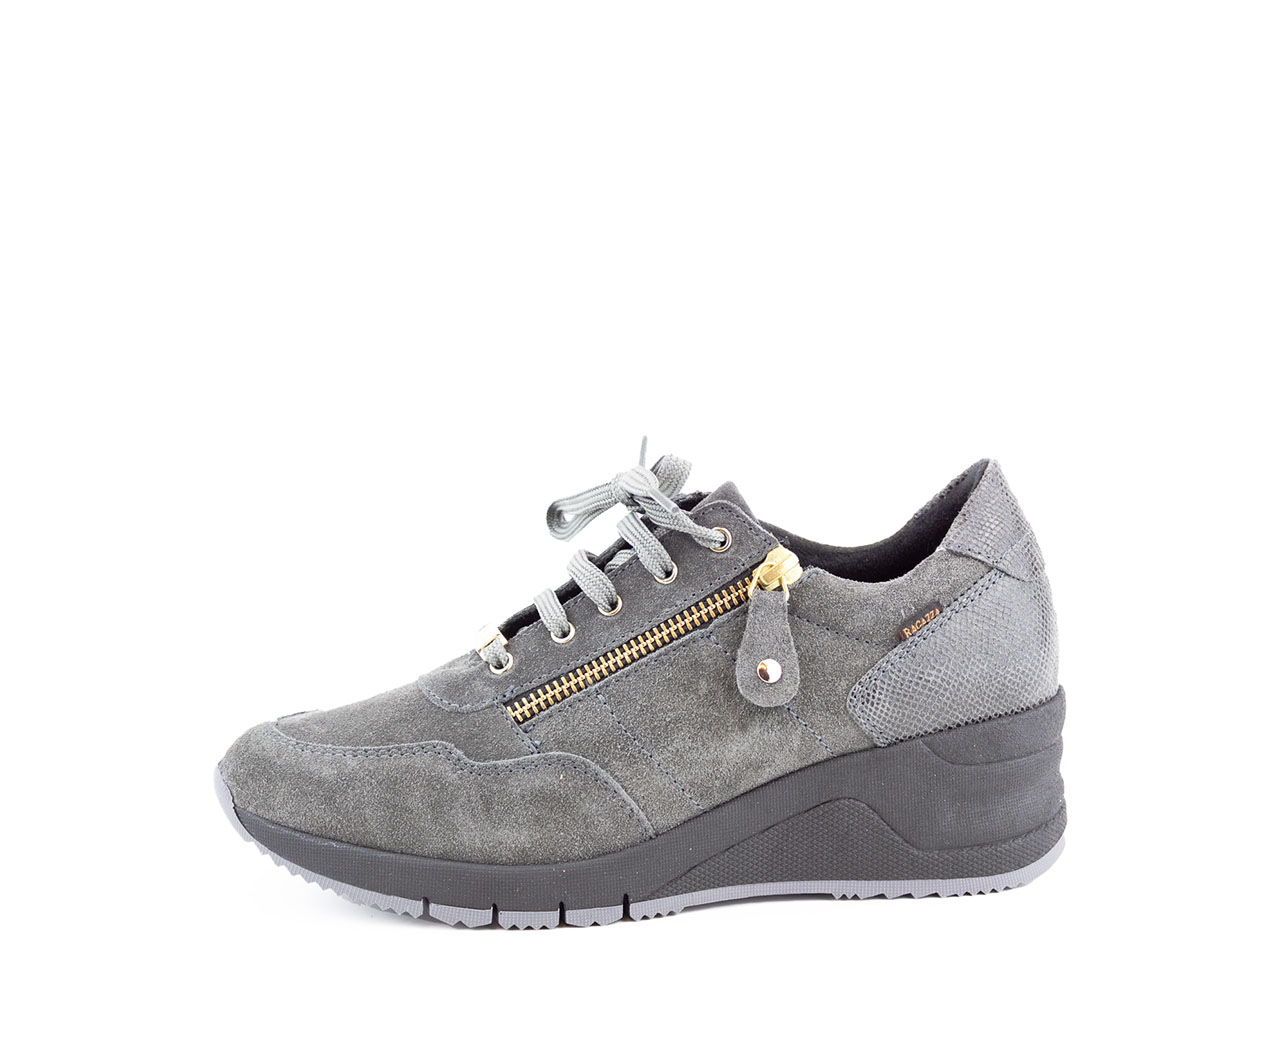 Extreme poverty Invite Interconnect Ragazza Sneakers 0210 Grey - Giannakouras Shoes